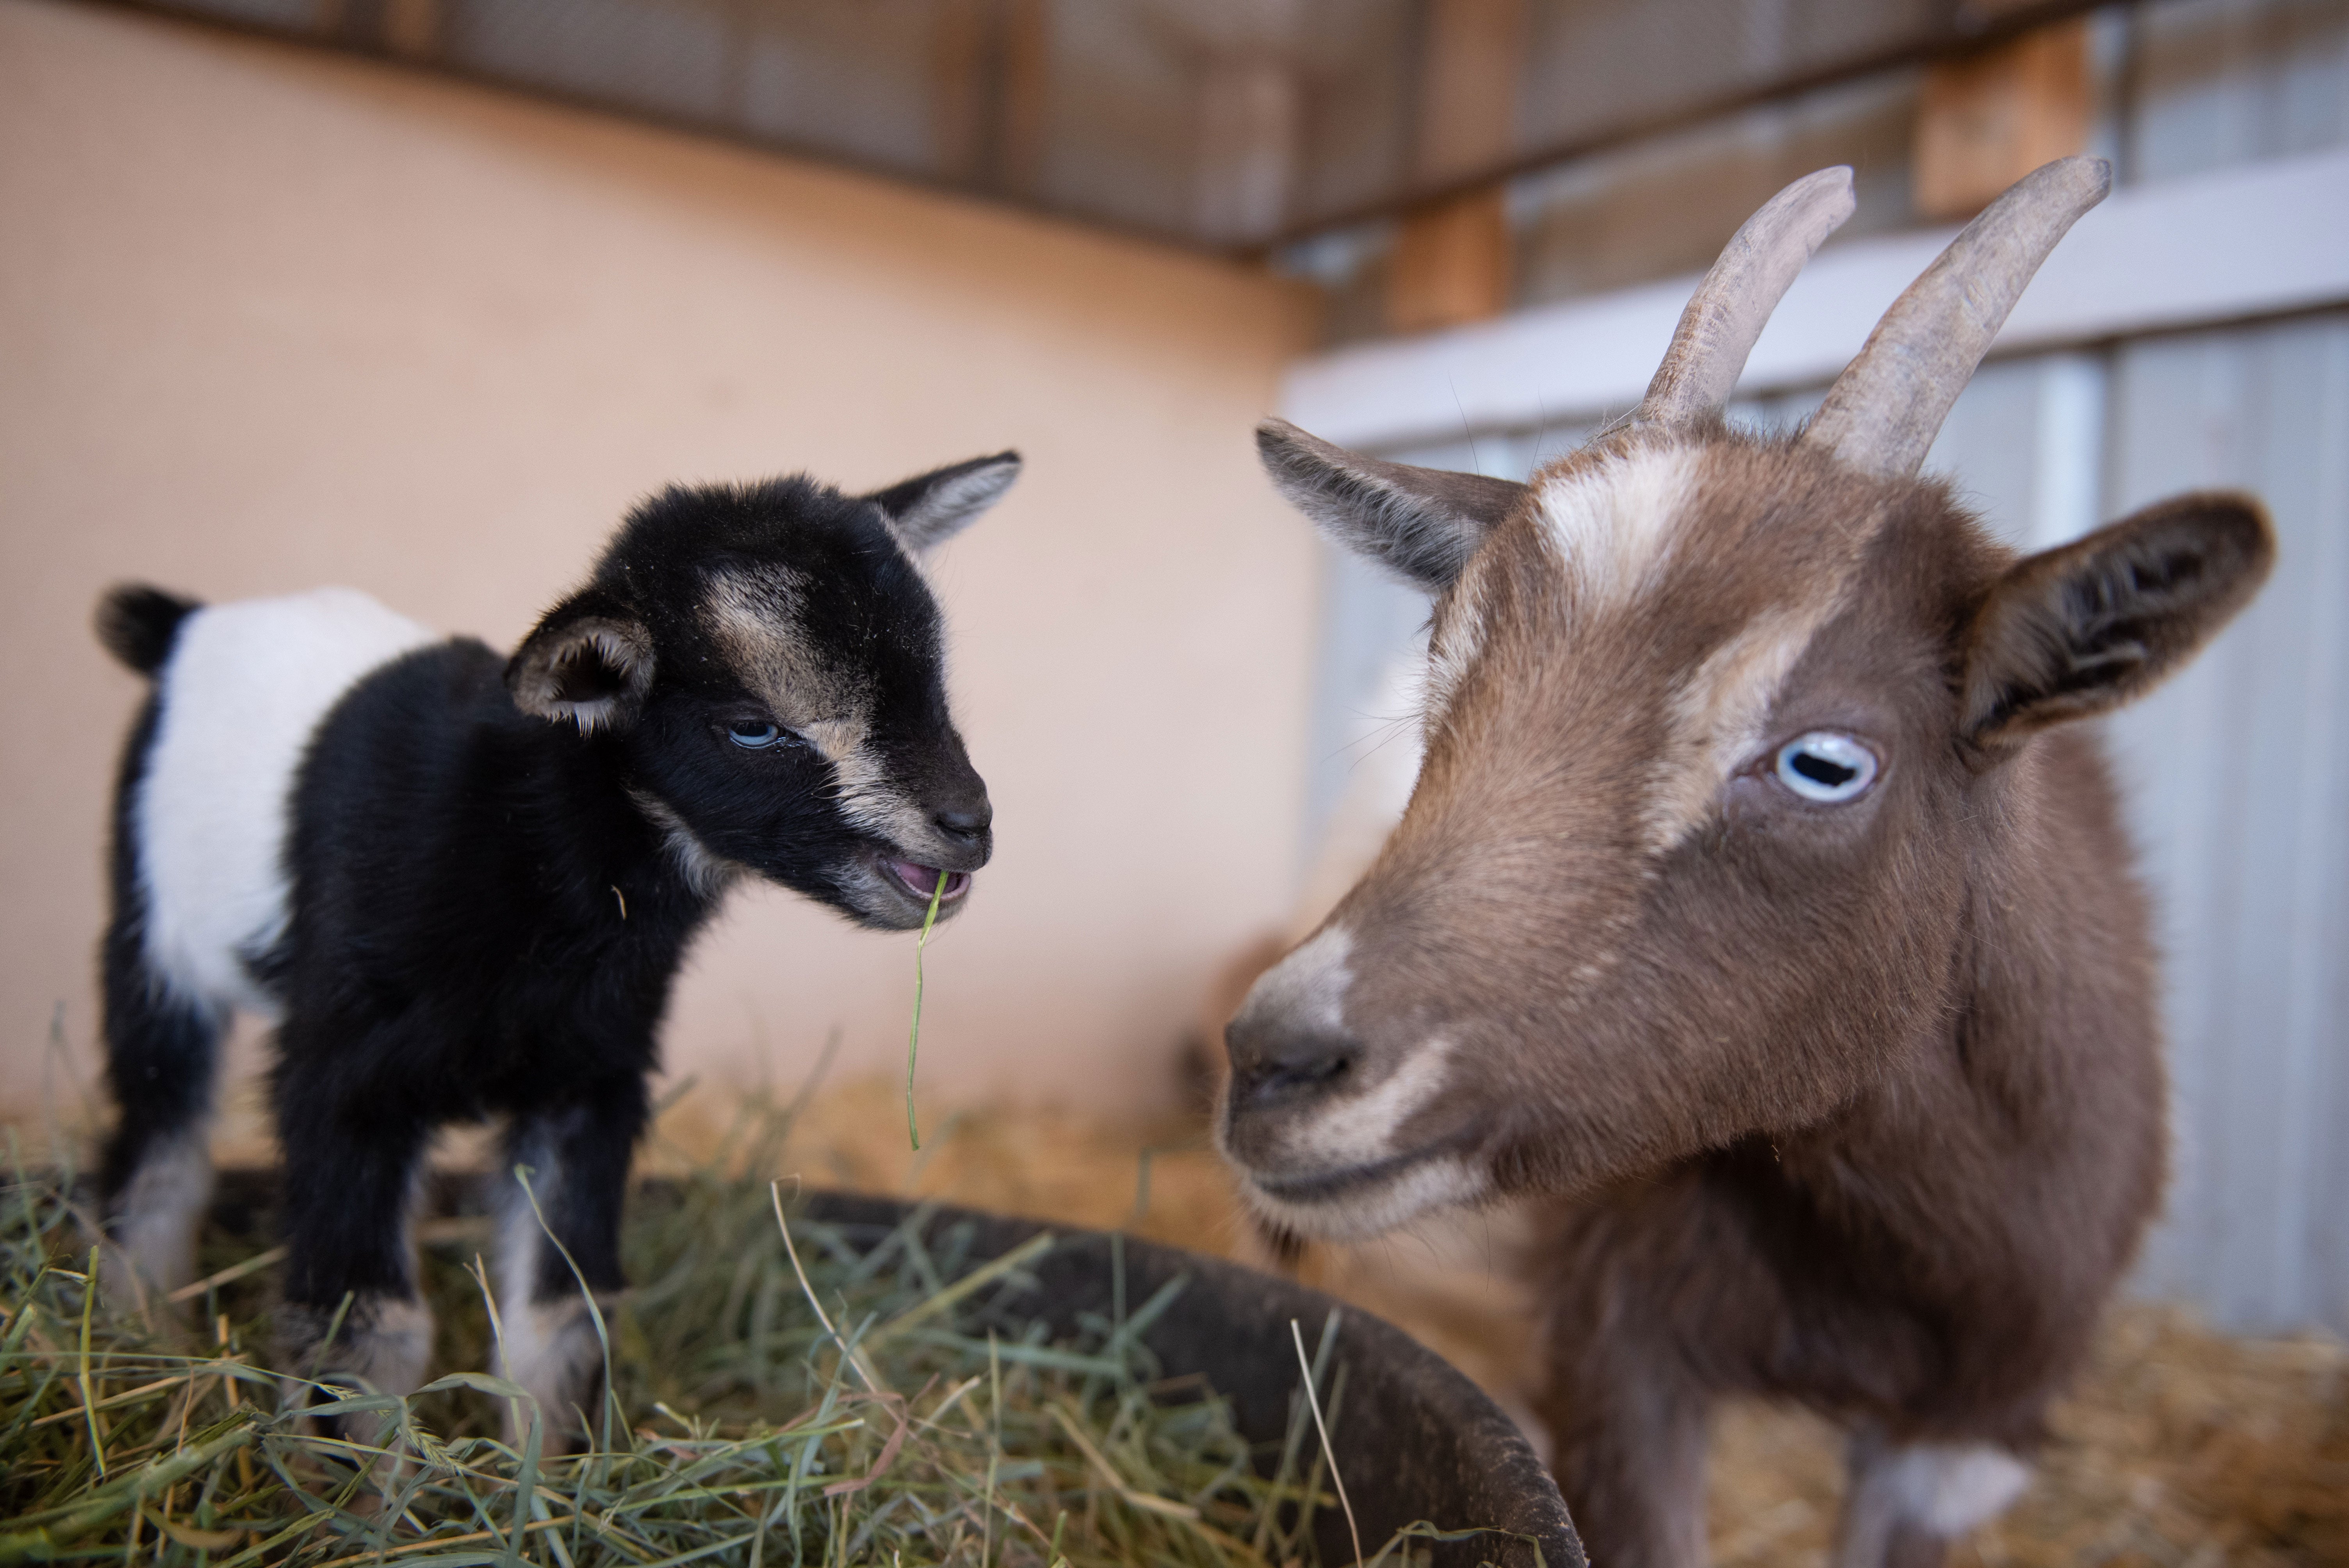 Watch baby goats kid around | Best Friends Animal Society